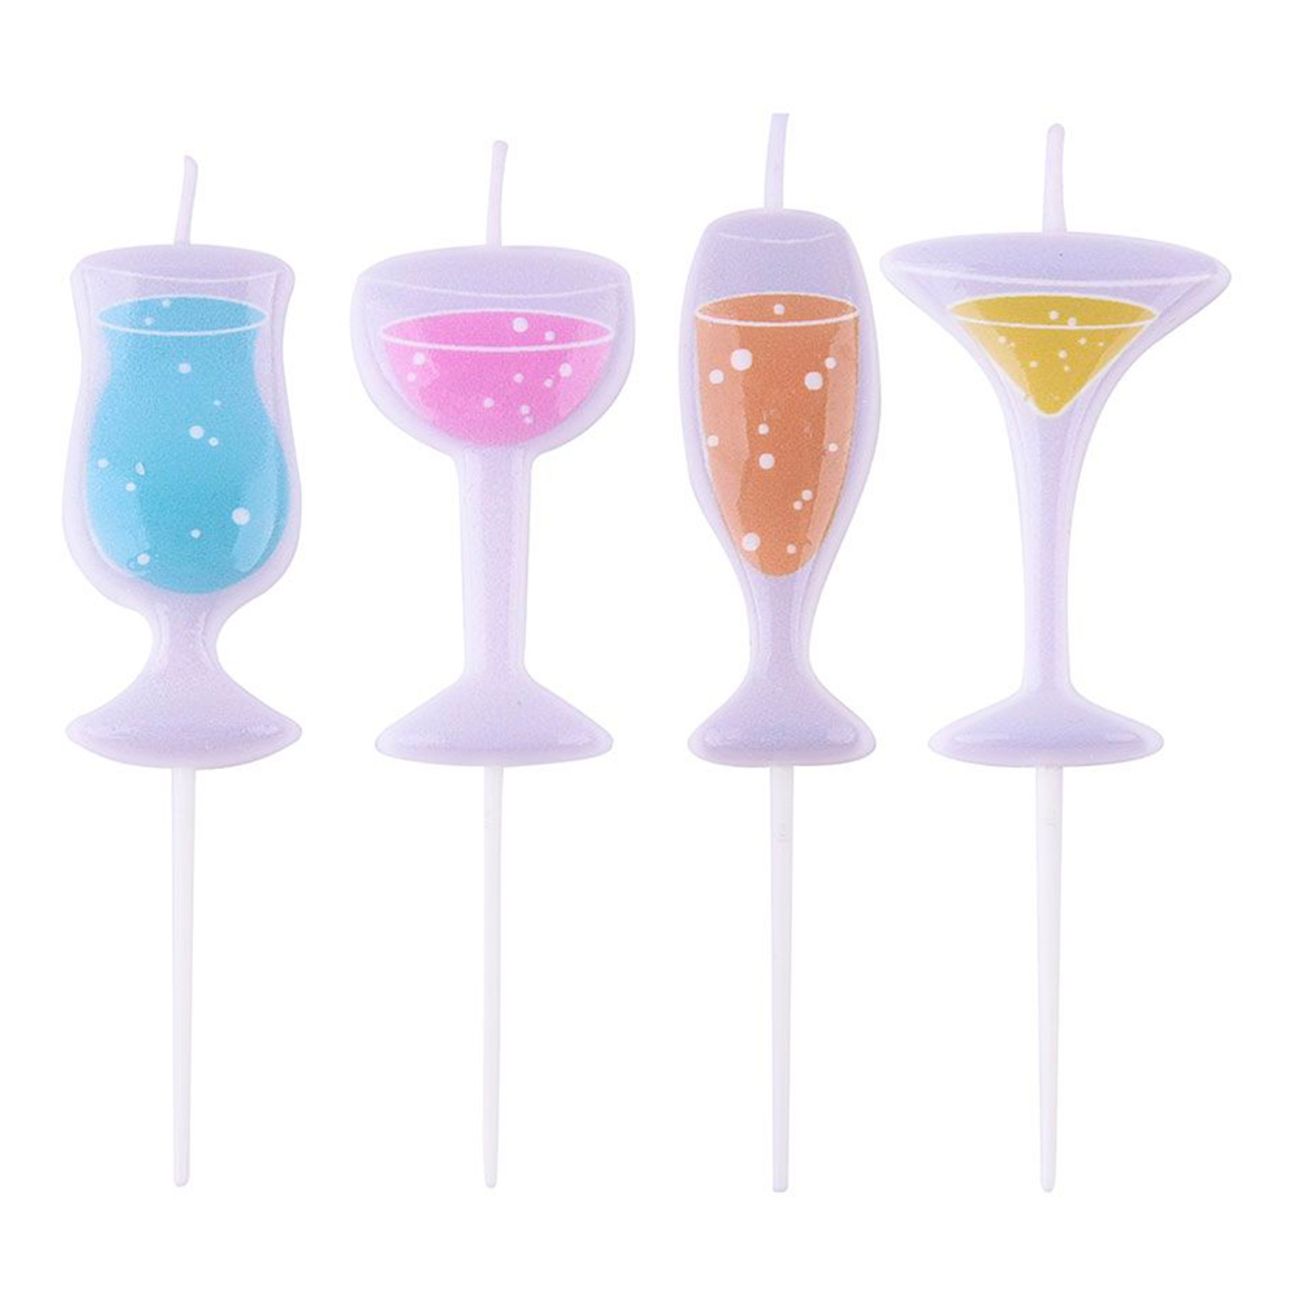 pme-tartljus-cocktails-84879-1